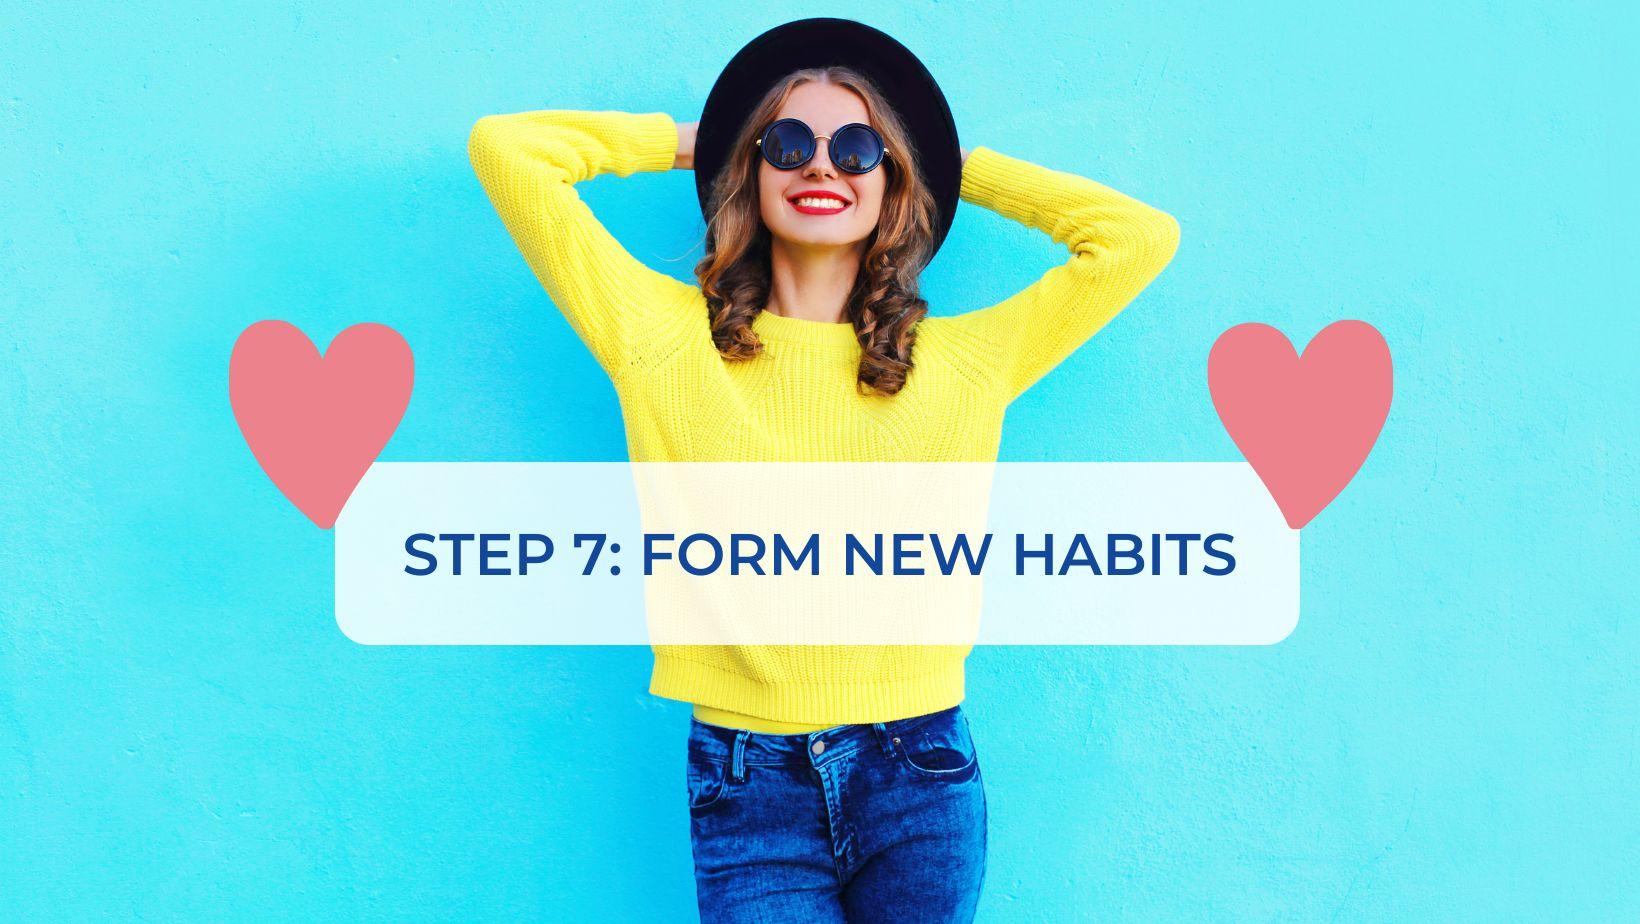 Step 7: Form New Habits